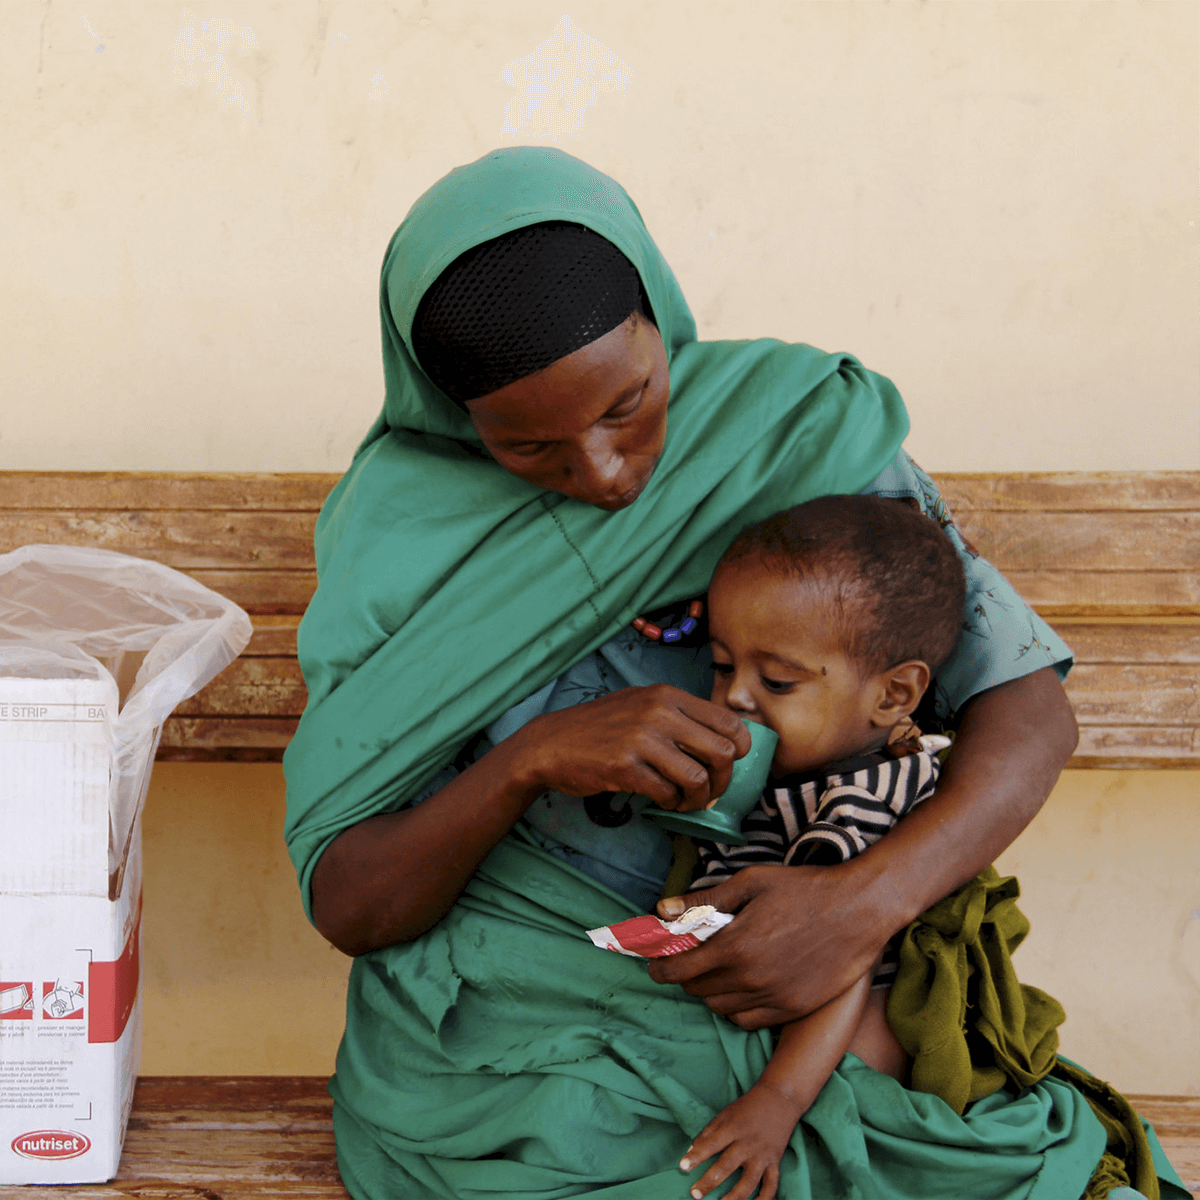 Results for Development combating severe acute malnutrition in Ethiopia